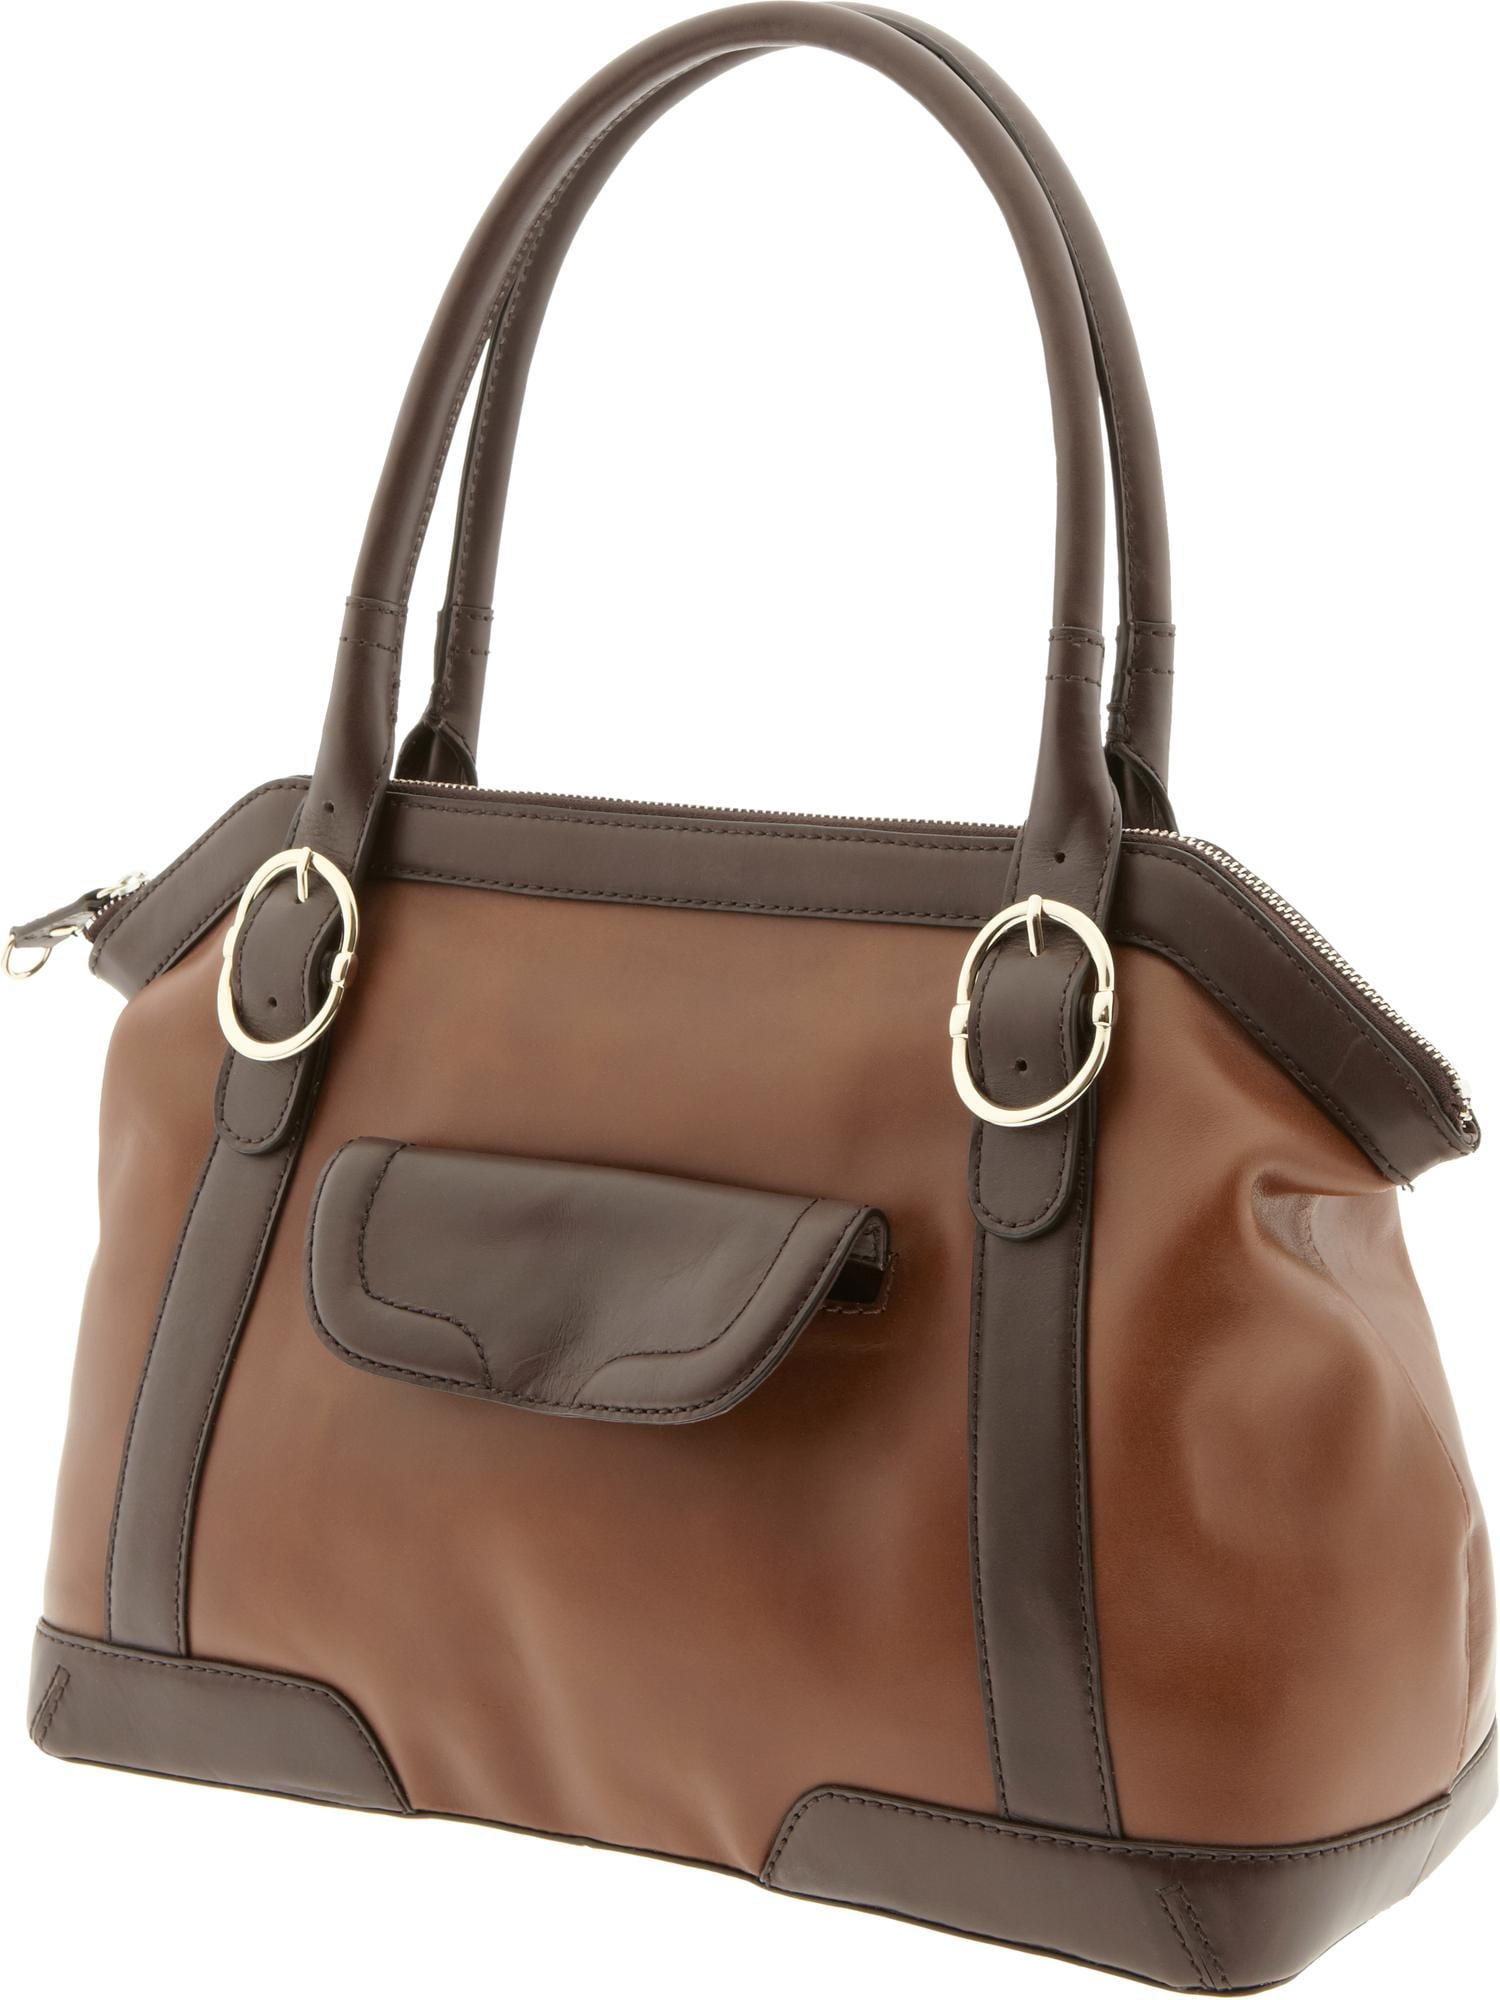 Abbey leather satchel